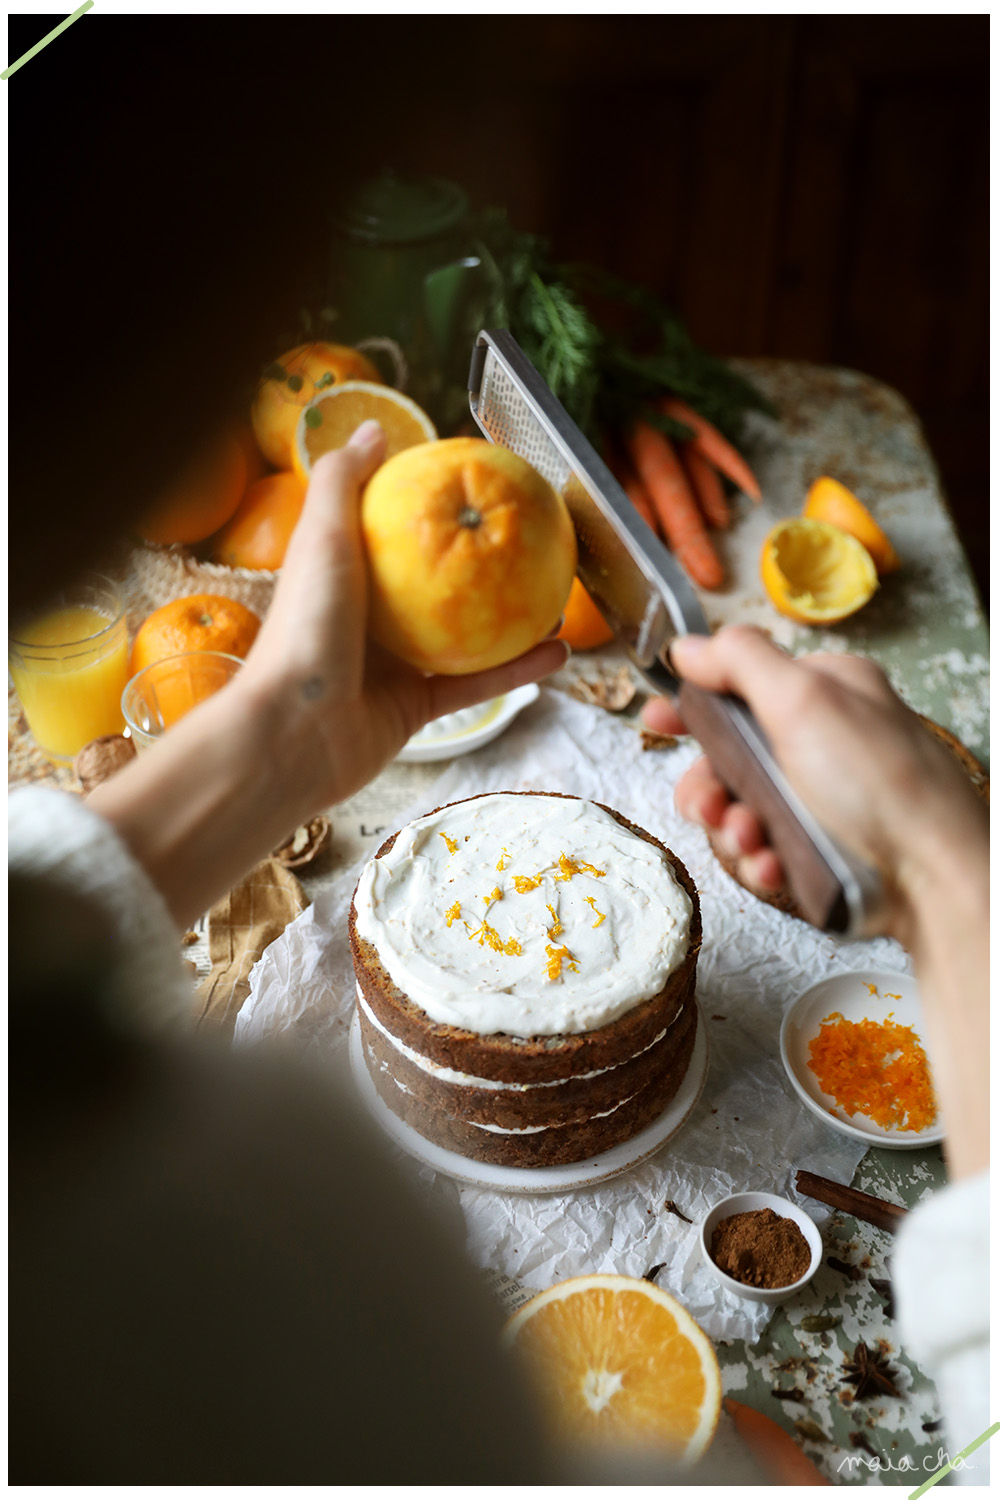 Carrot Cake - Carotte Cake - Sans lactose - Recette - Maïa Chä